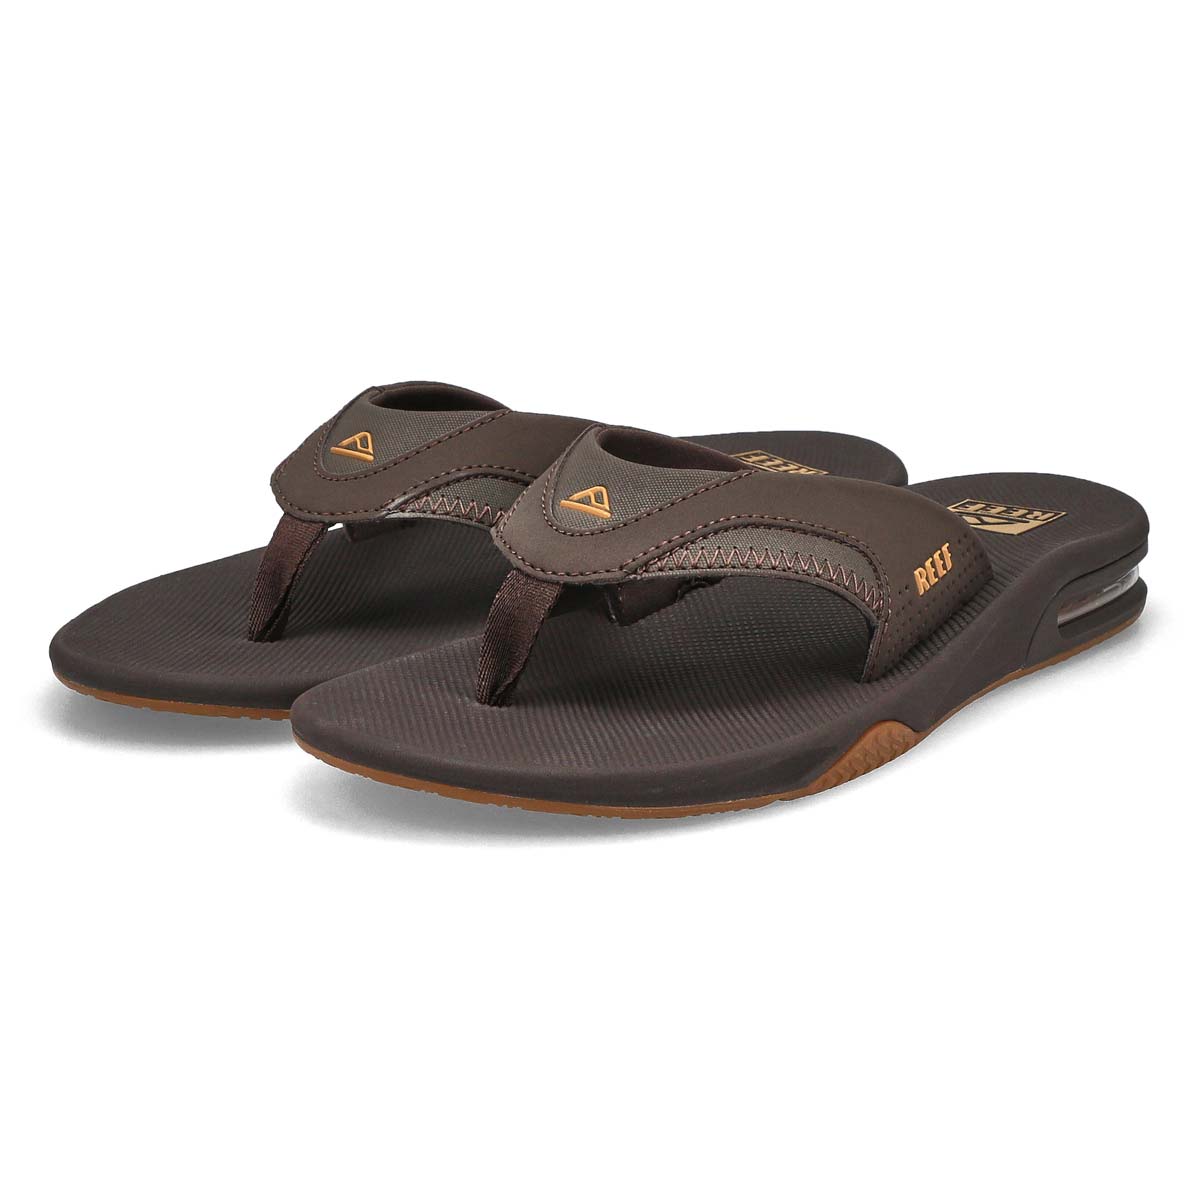 Reef Men's FANNING brown/gum thong sandals | SoftMoc.com